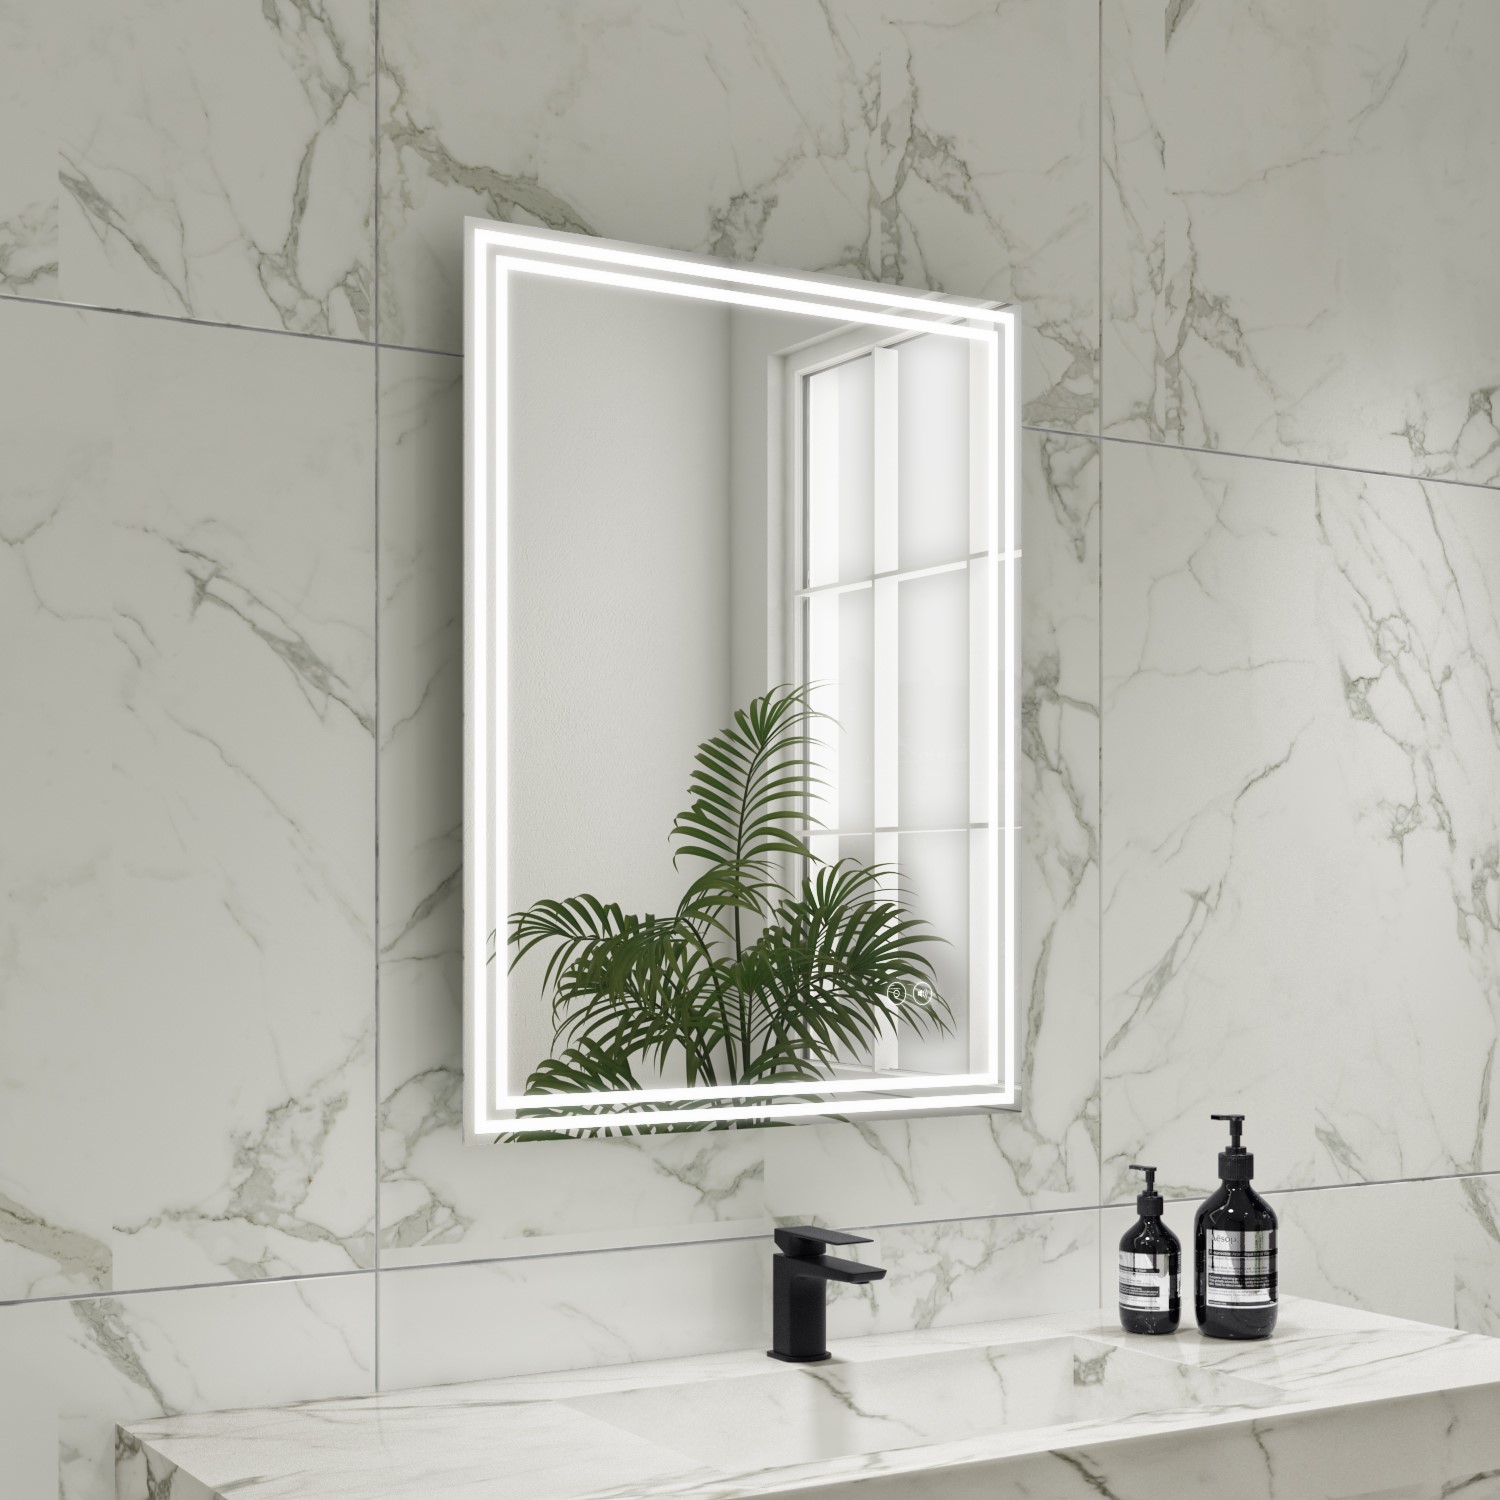 Rectangular Double Border LED Bathroom Mirror with Demister 600x800mm -Antila